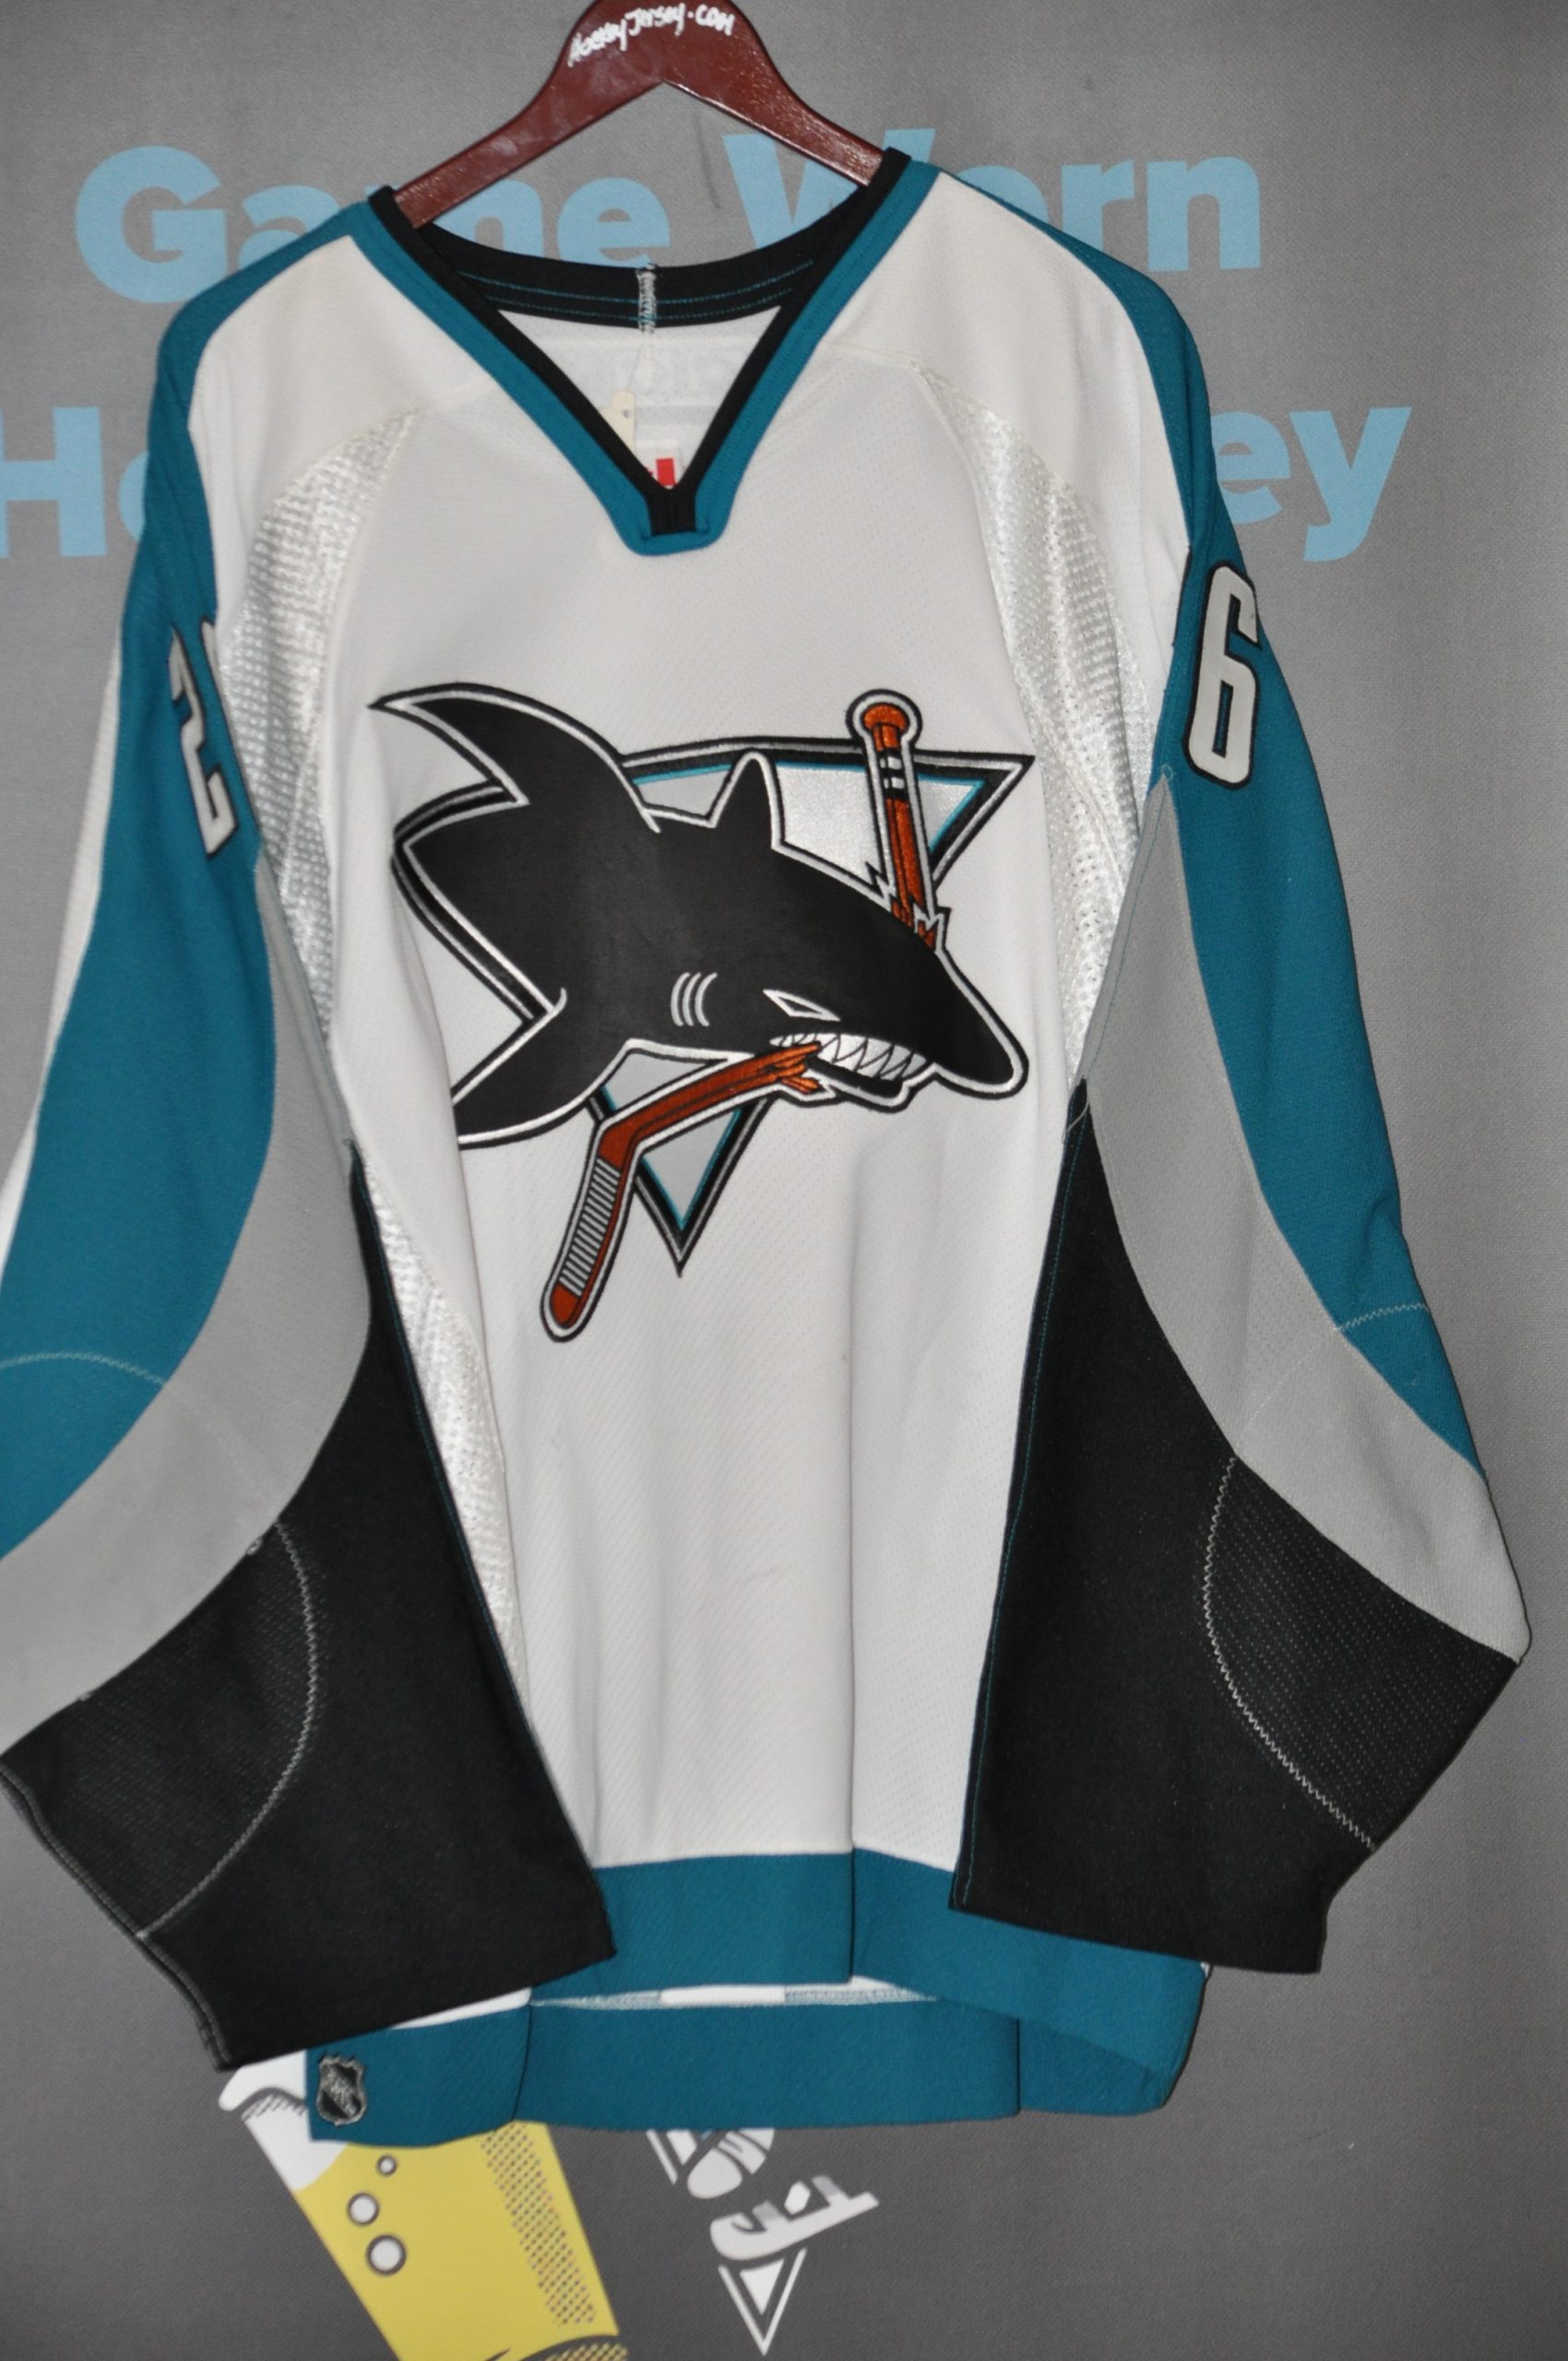 San Jose Sharks jerseys for sale! : r/hockeyjerseys